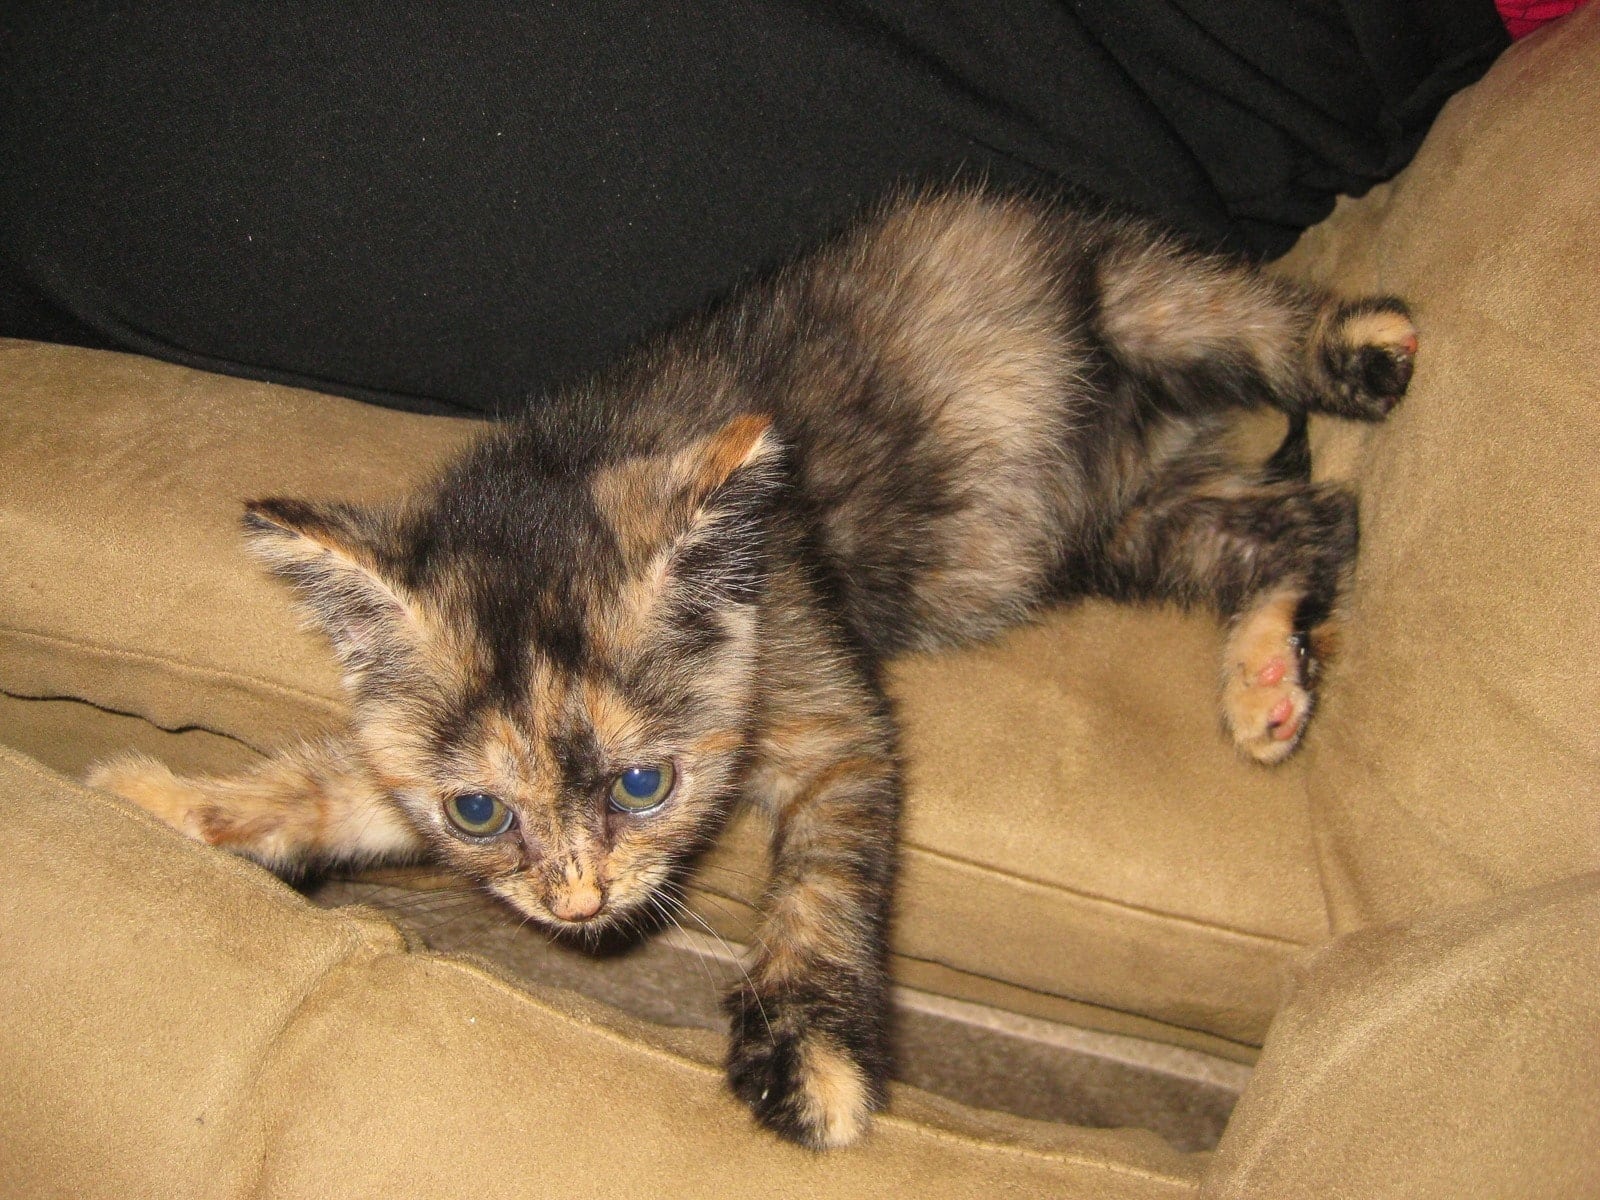 Leela as a kitten